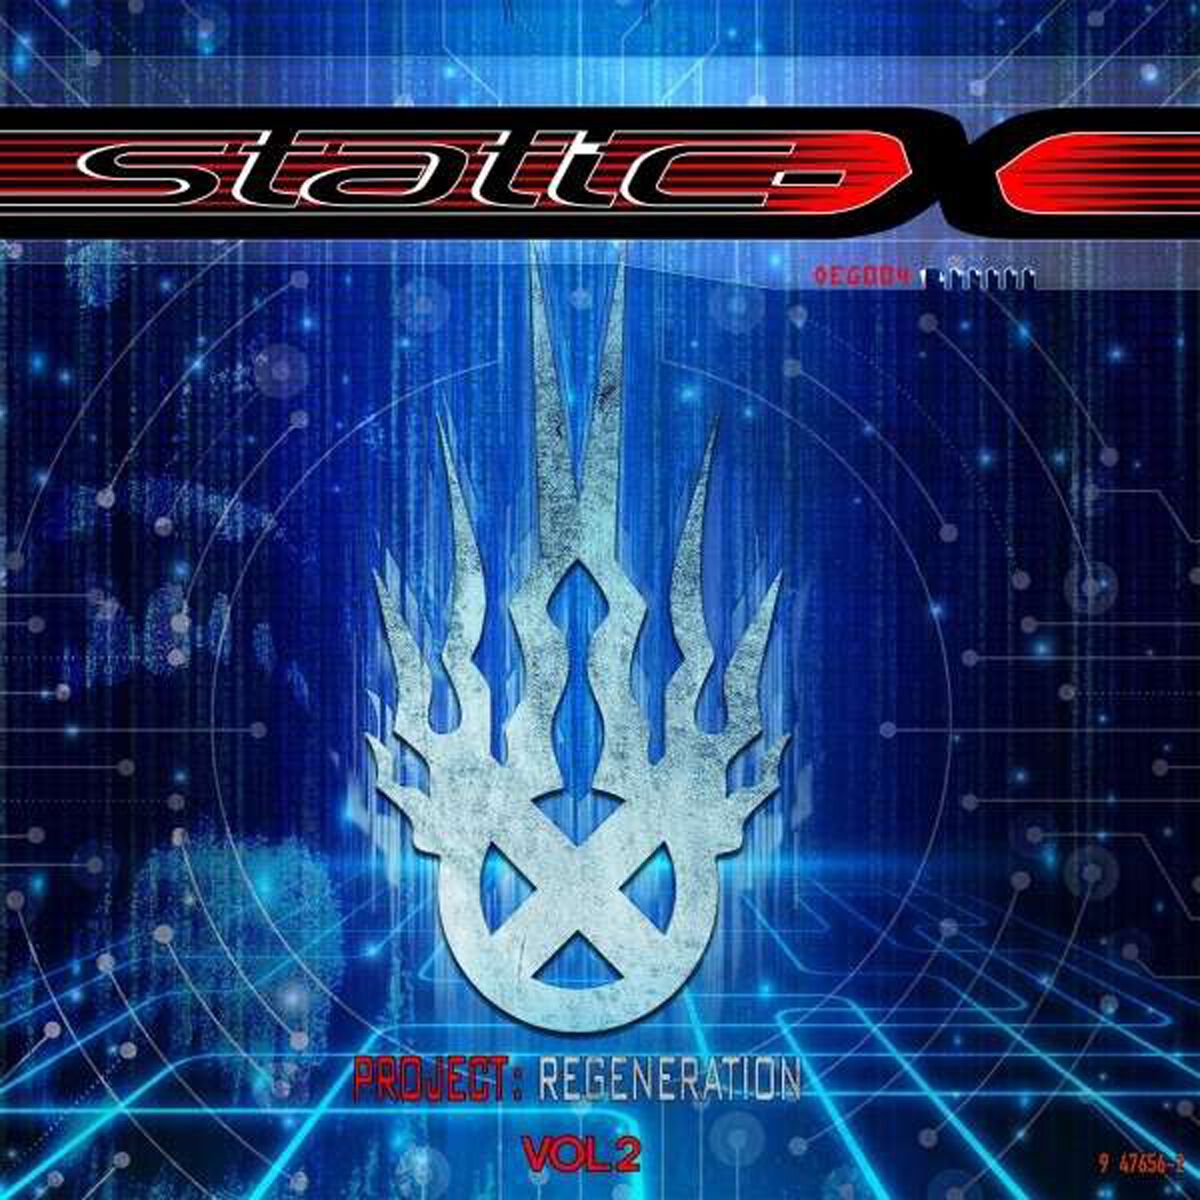 Static-X Project Regeneration Vol. 2 CD multicolor